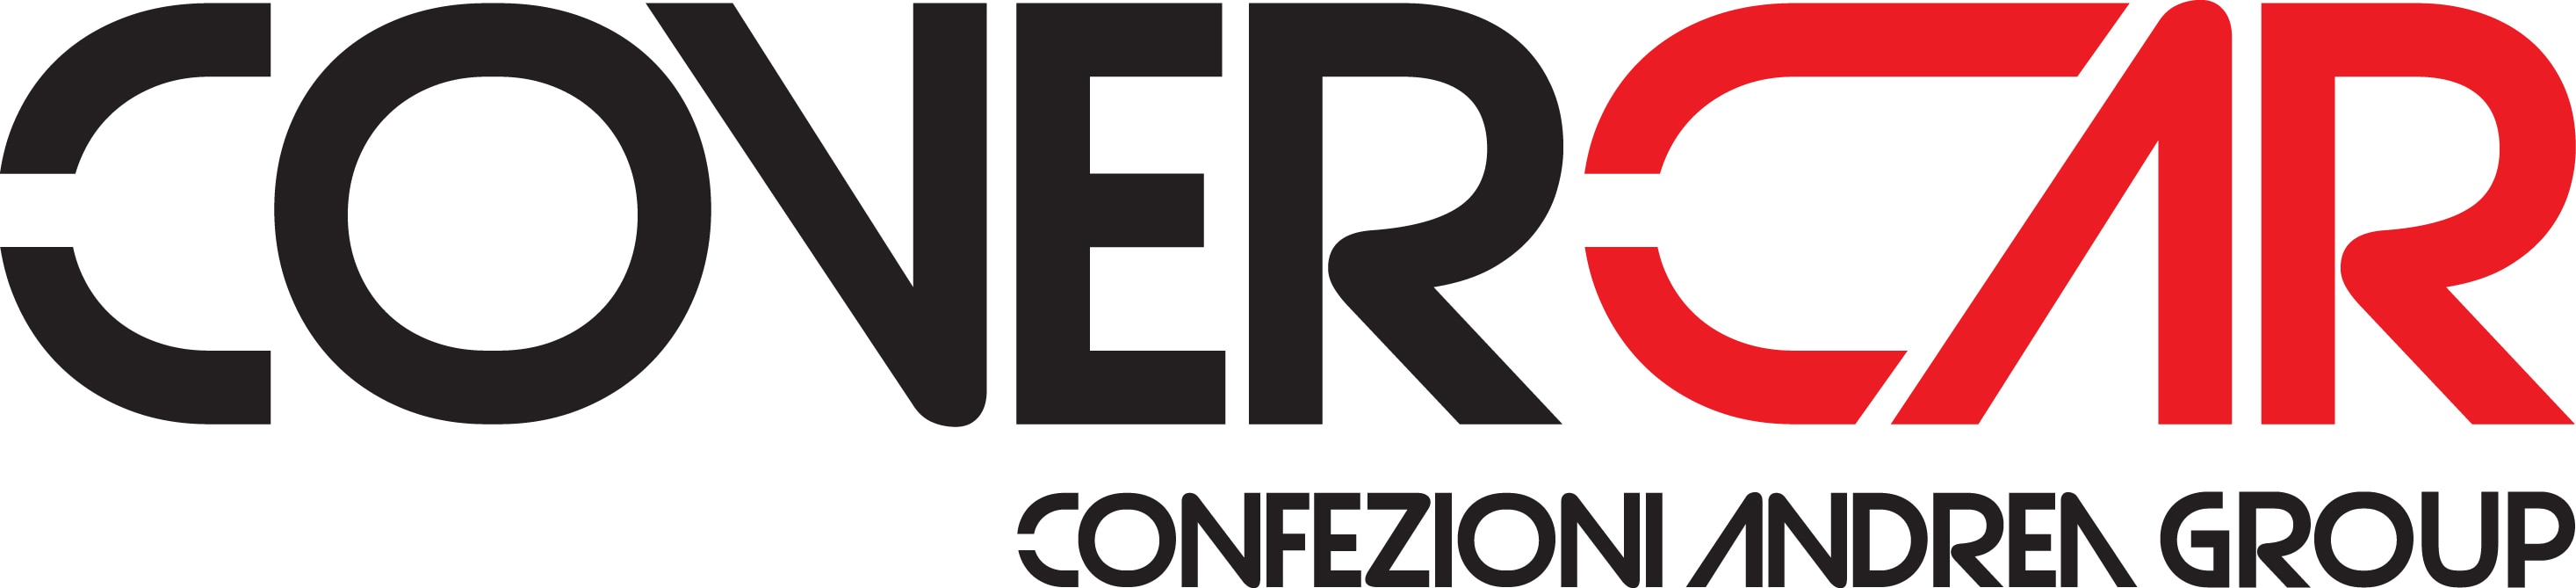 Logo Covercar